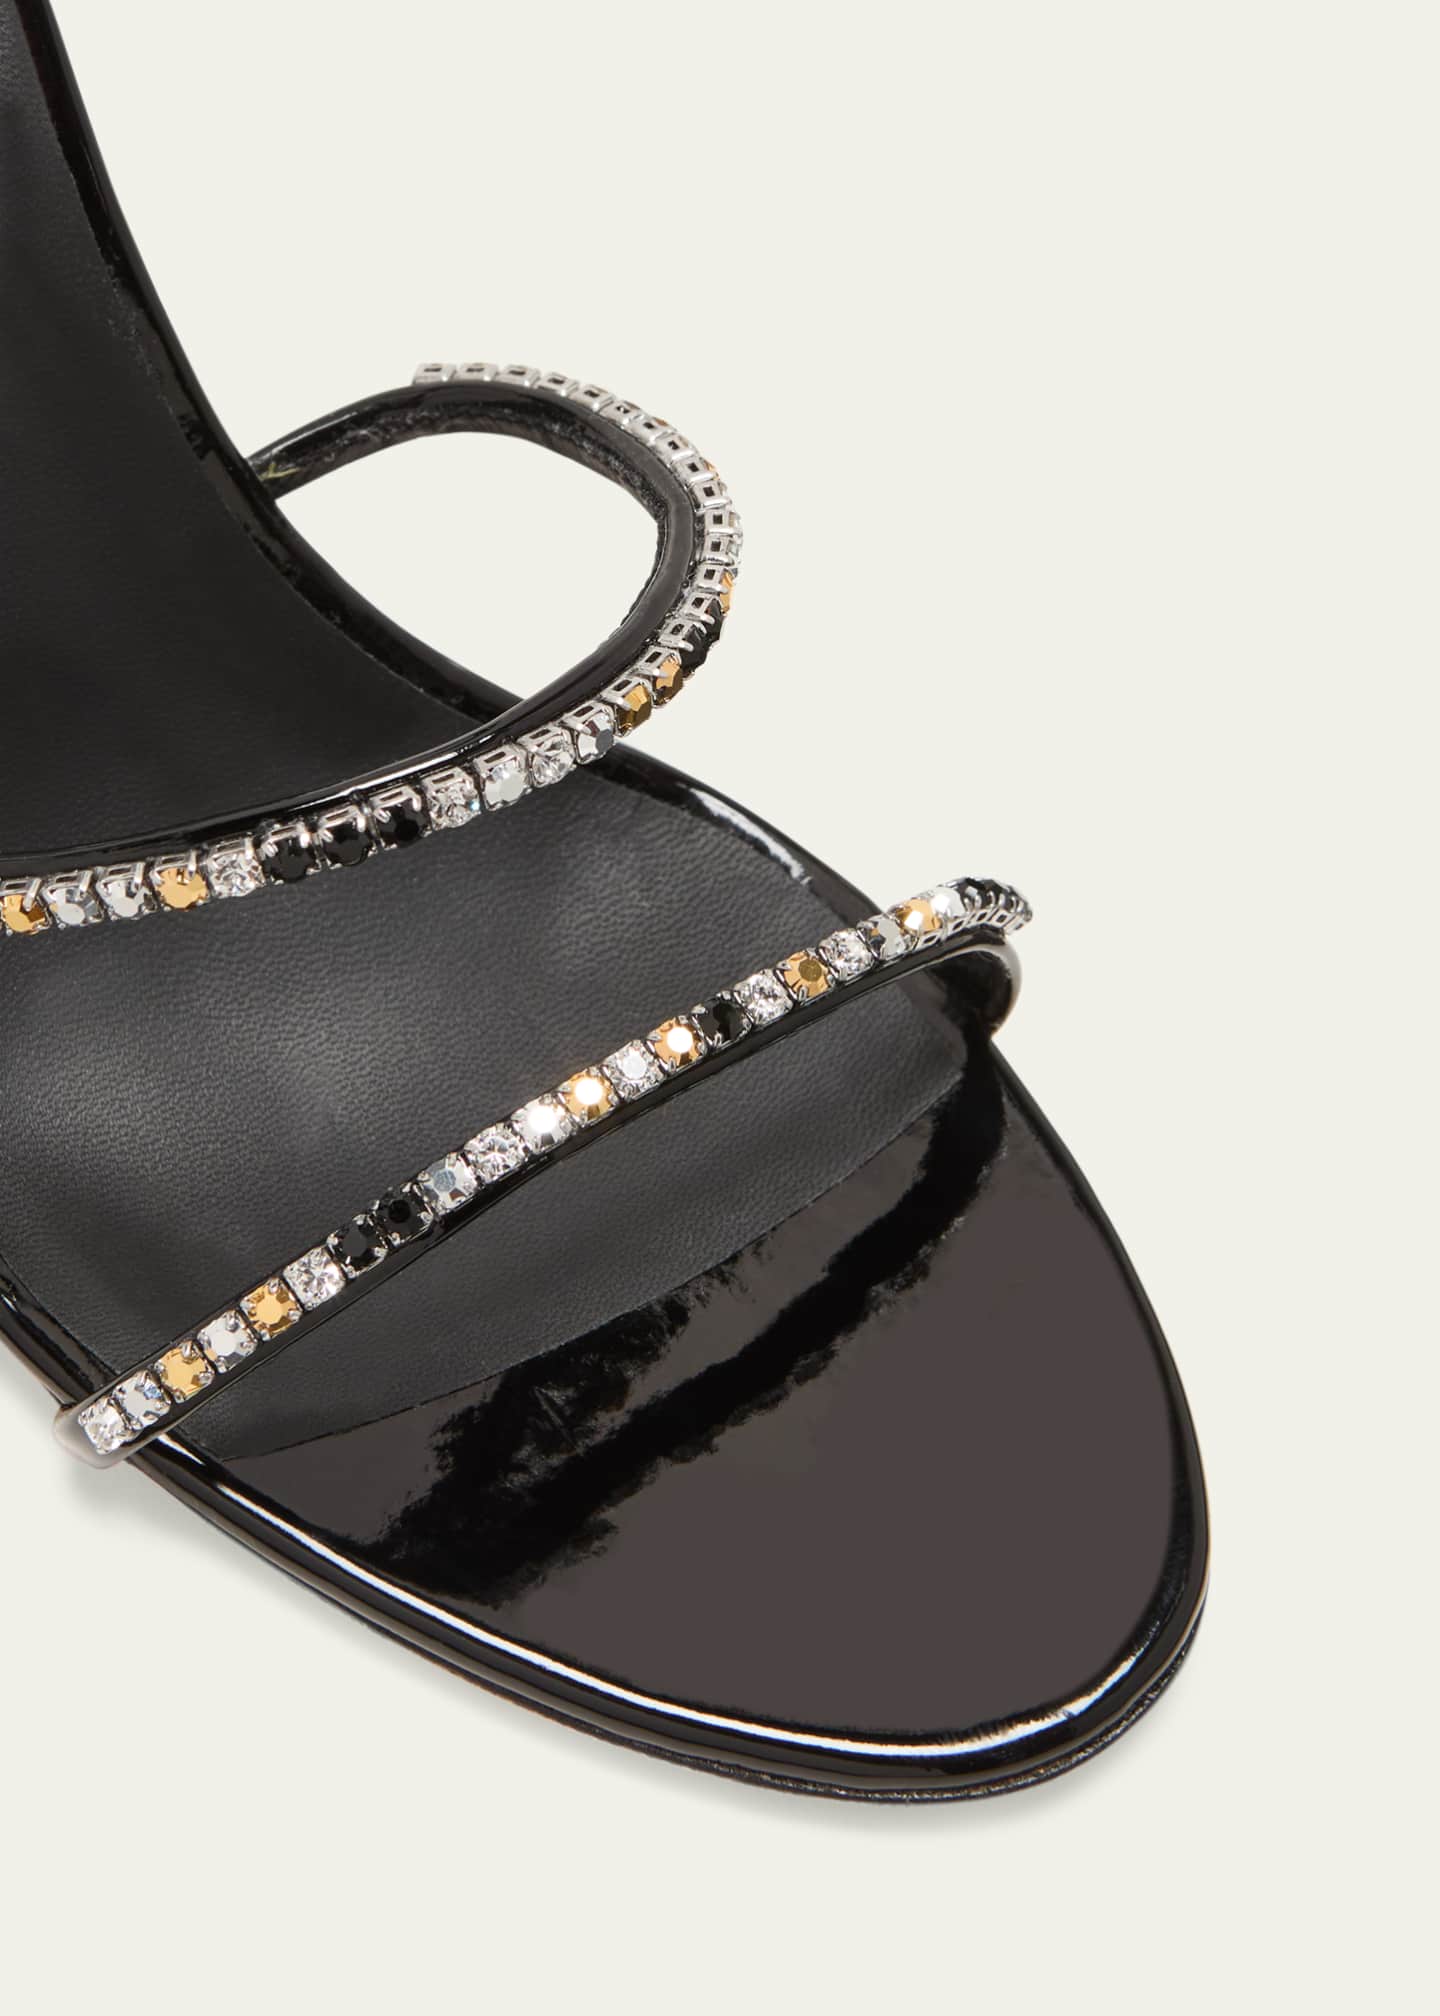 ufravigelige tempo fremstille Giuseppe Zanotti Patent Crystal Three-Band Slide Sandals - Bergdorf Goodman